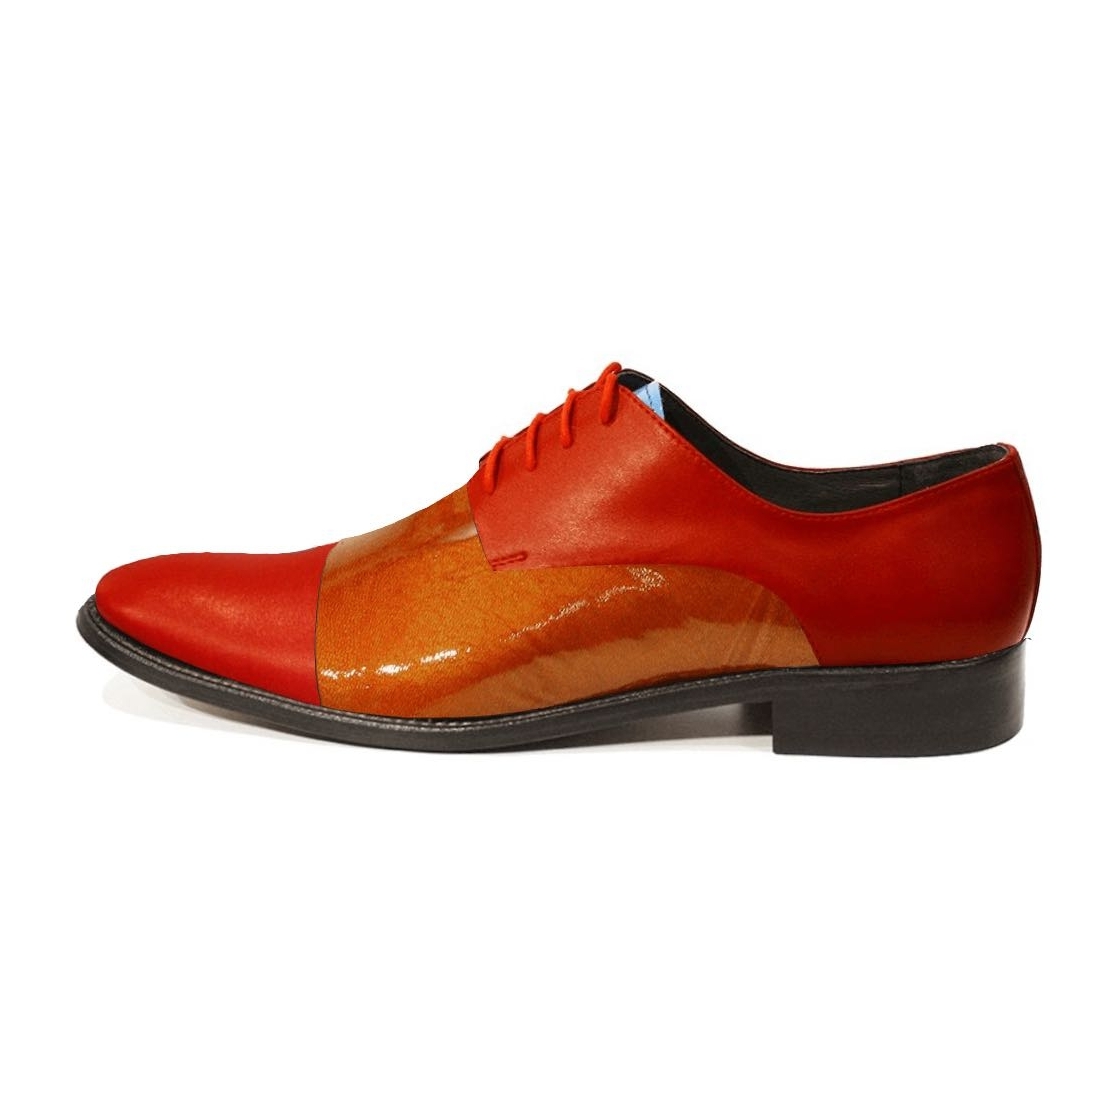 Modello Teterro - Chaussure Classique - Handmade Colorful Italian Leather Shoes